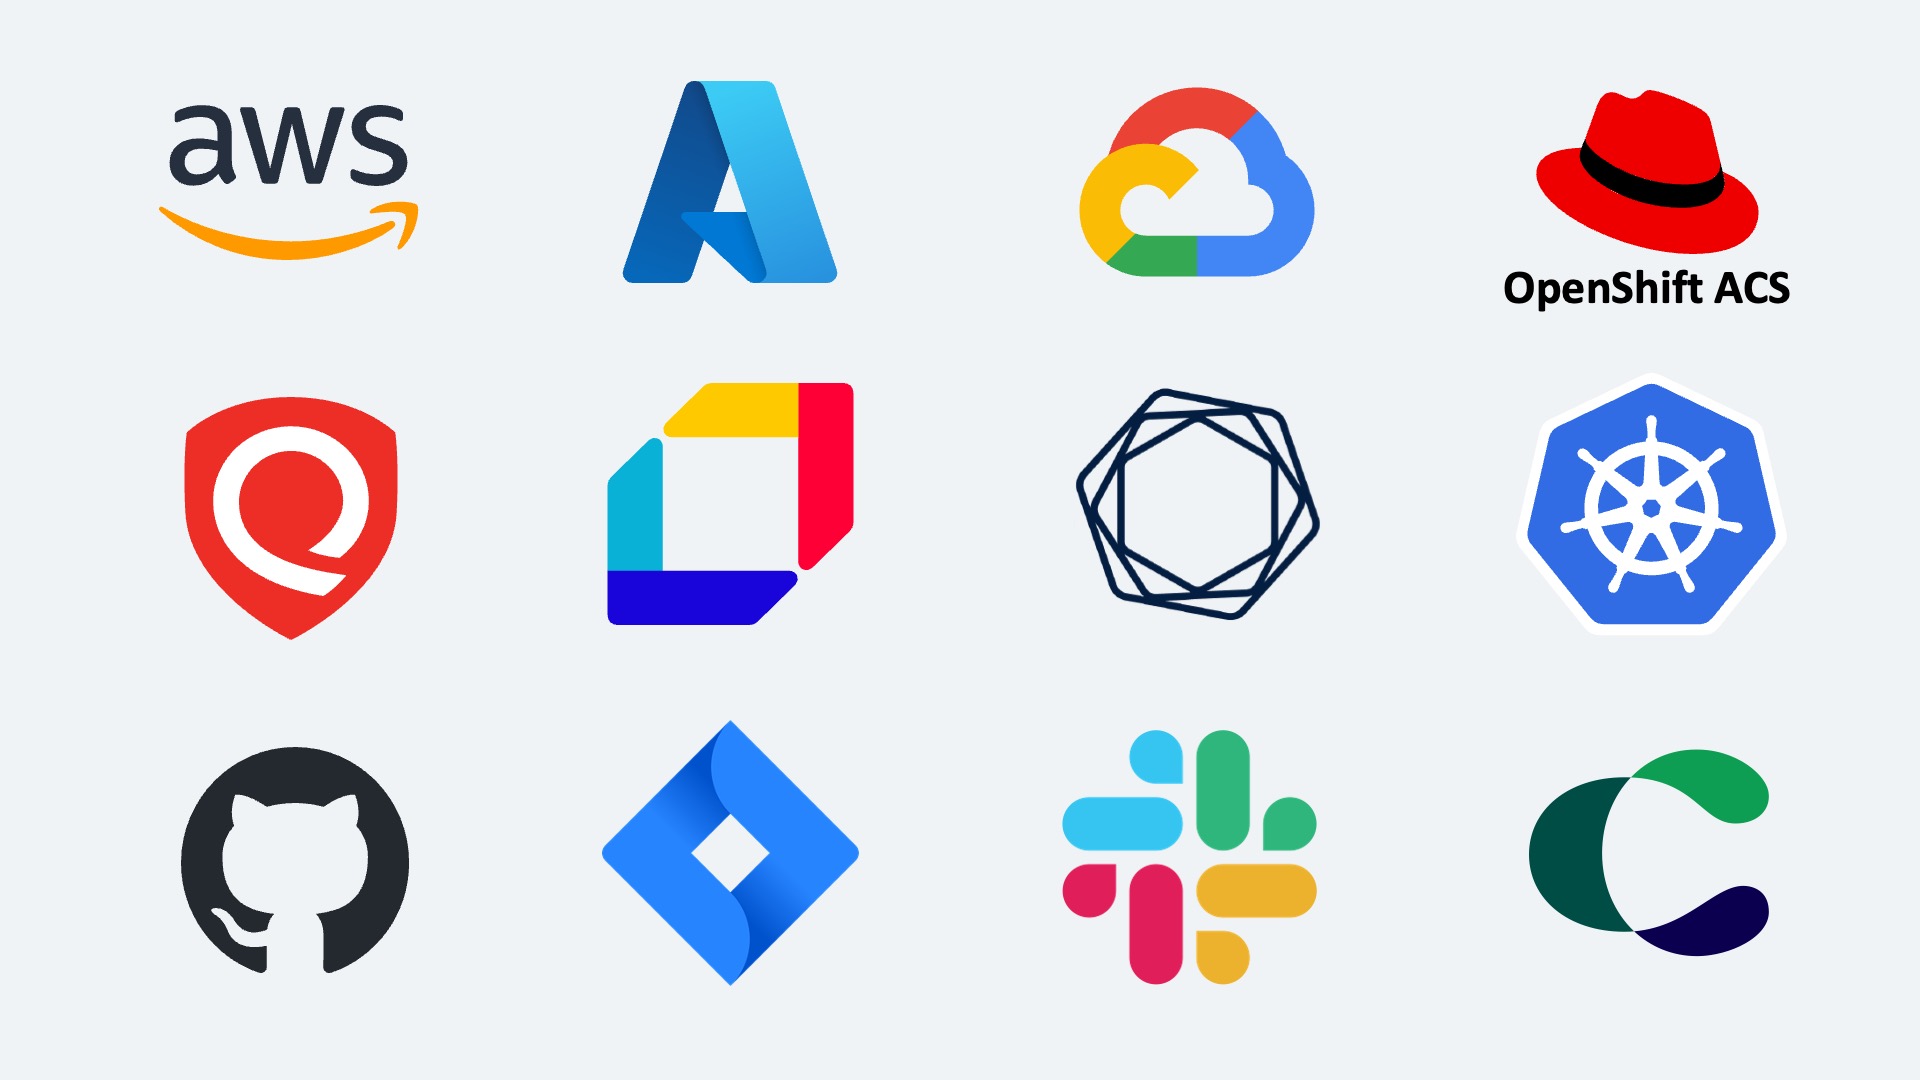 Logos for AWS, Azure, GCP, Red Hat OpenShift ACS, Qualys, Aqua, Tenable, Kubernetes, GitHub, Jira, Slack, Contrast